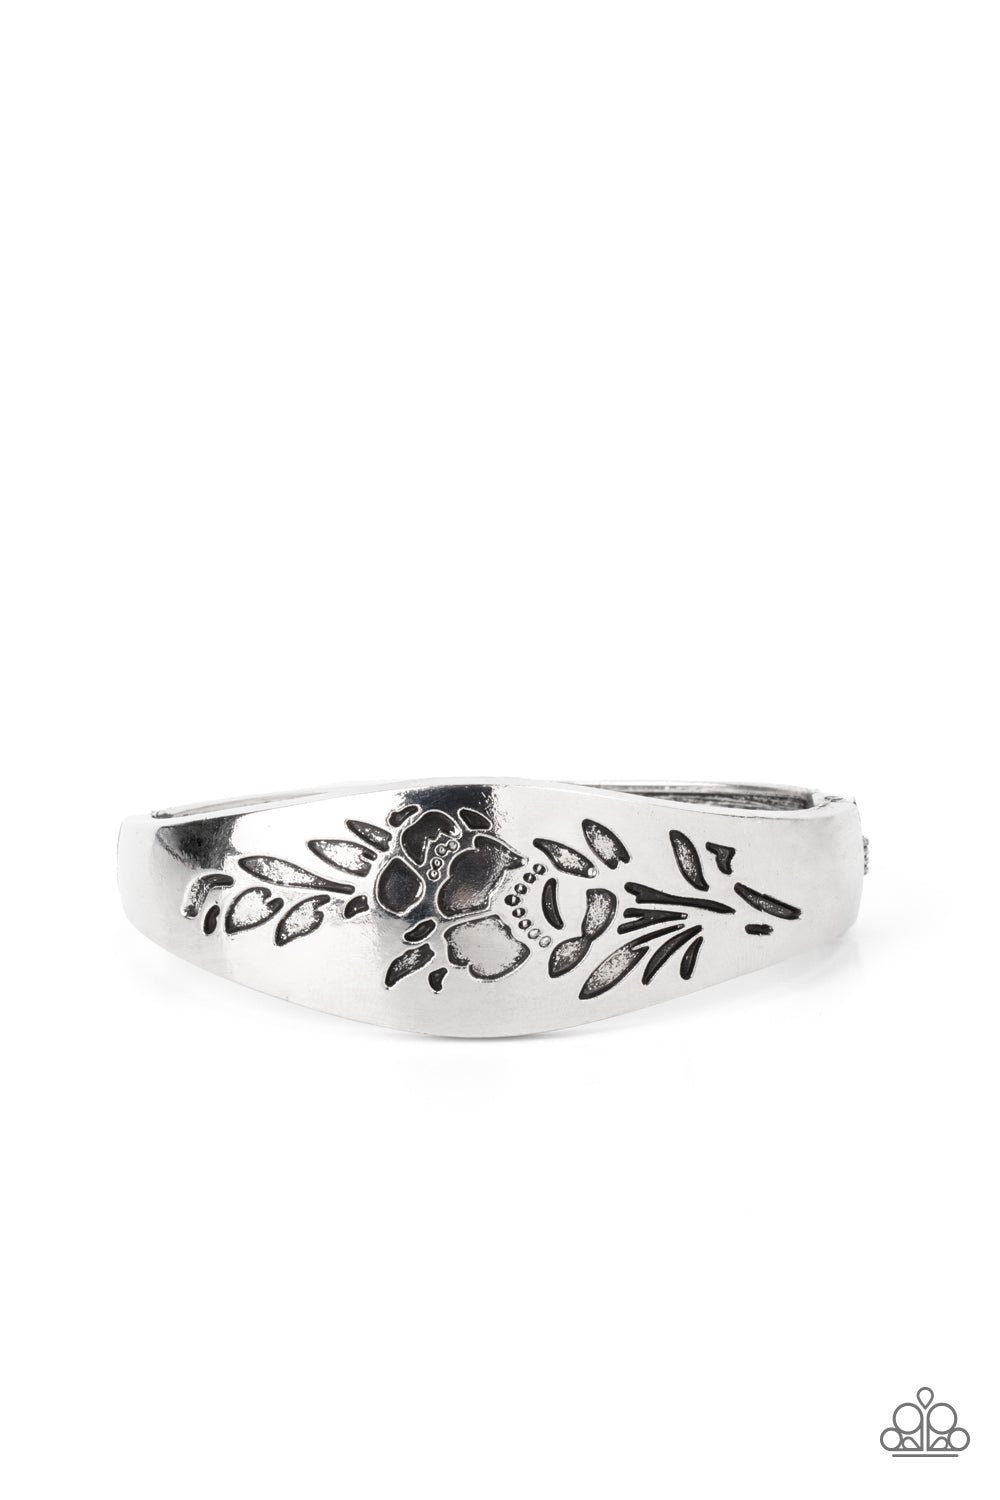 Fond of Florals - Silver Bracelet - Paparazzi Accessories